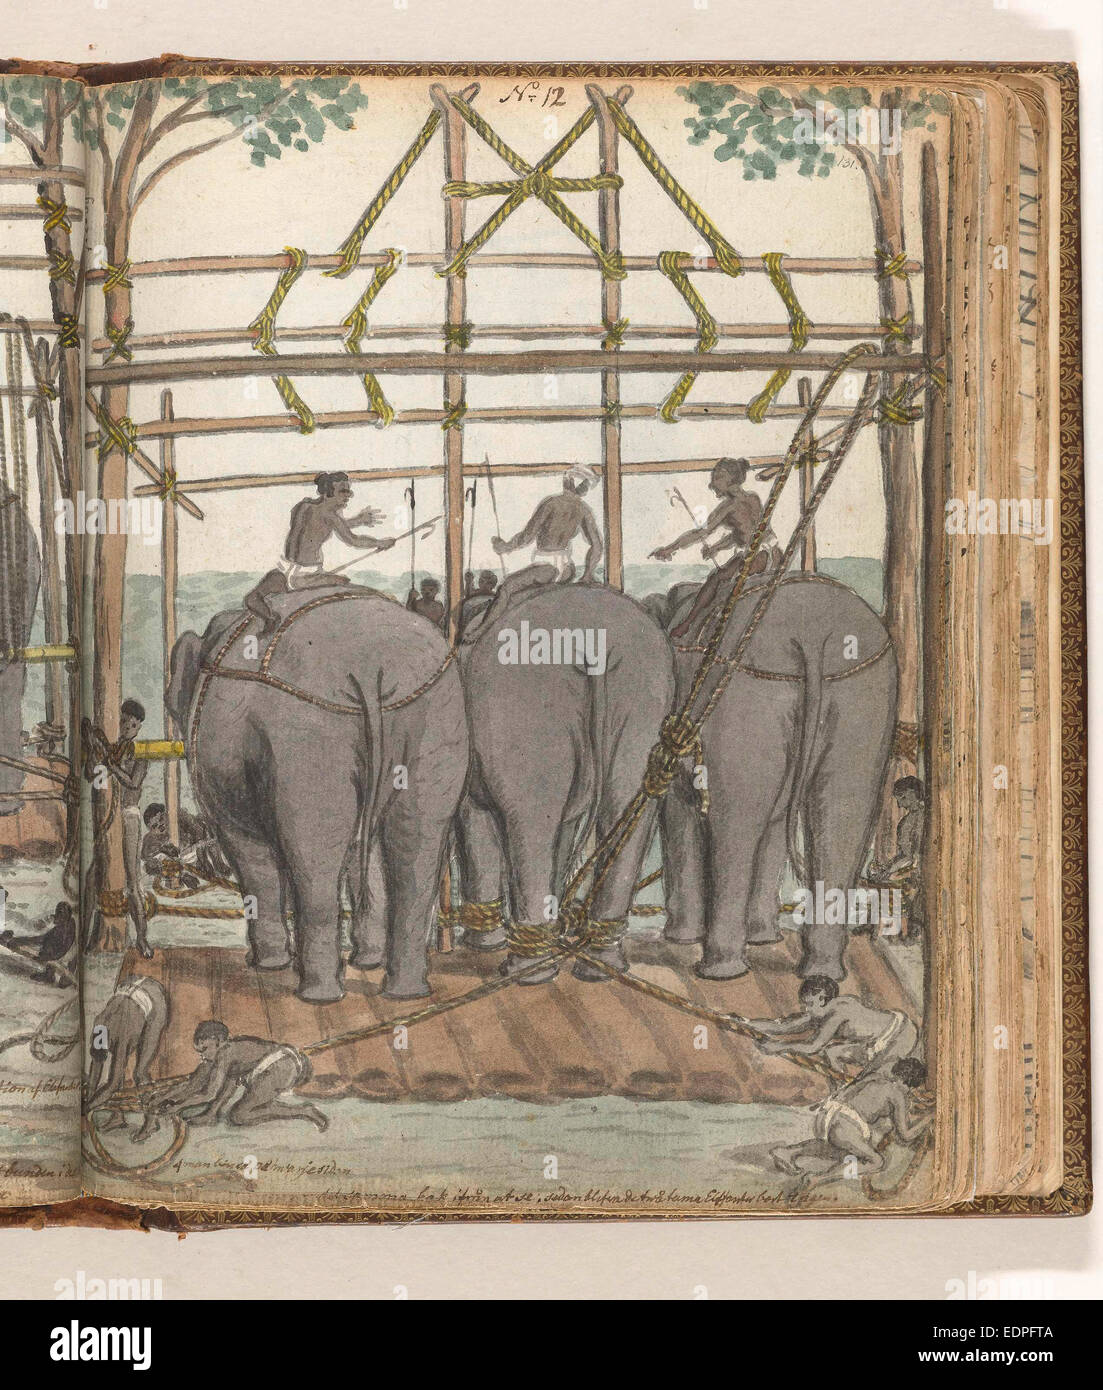 Elephants, Jan Brandes, 1785 Stock Photo